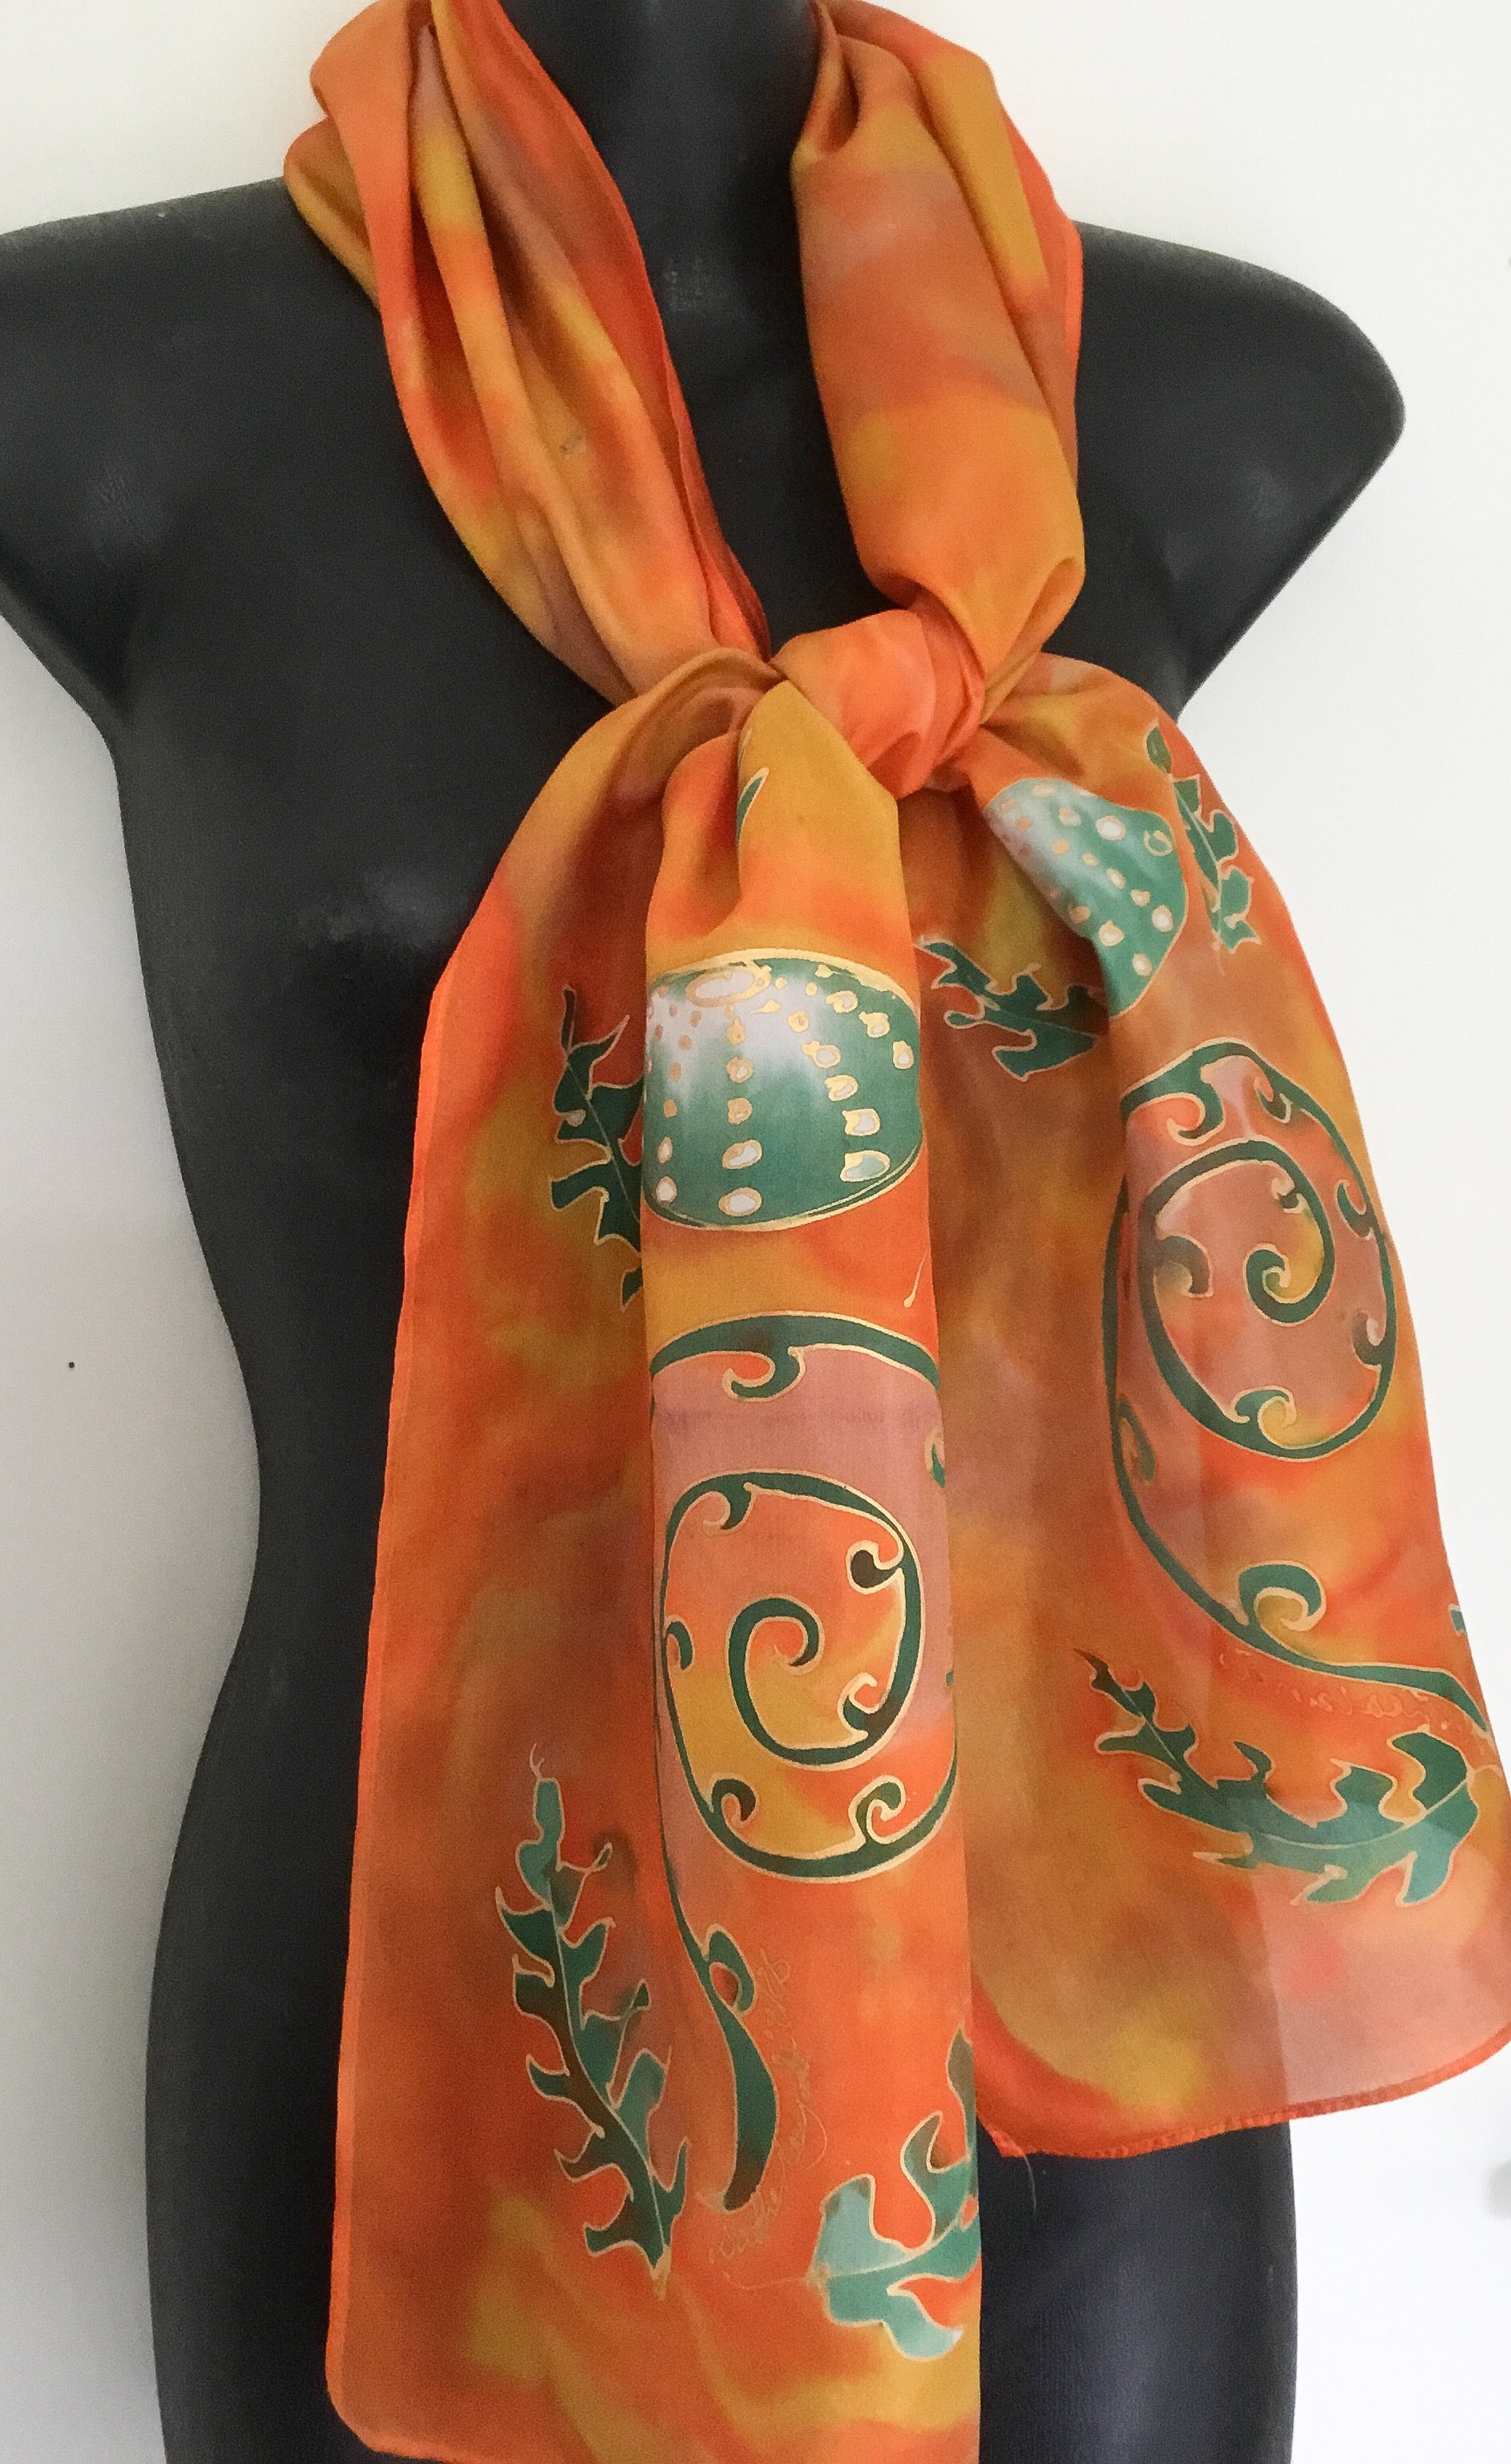 Kina on Koru - Hand Painted Silk Scarf - Satherley Silks NZ